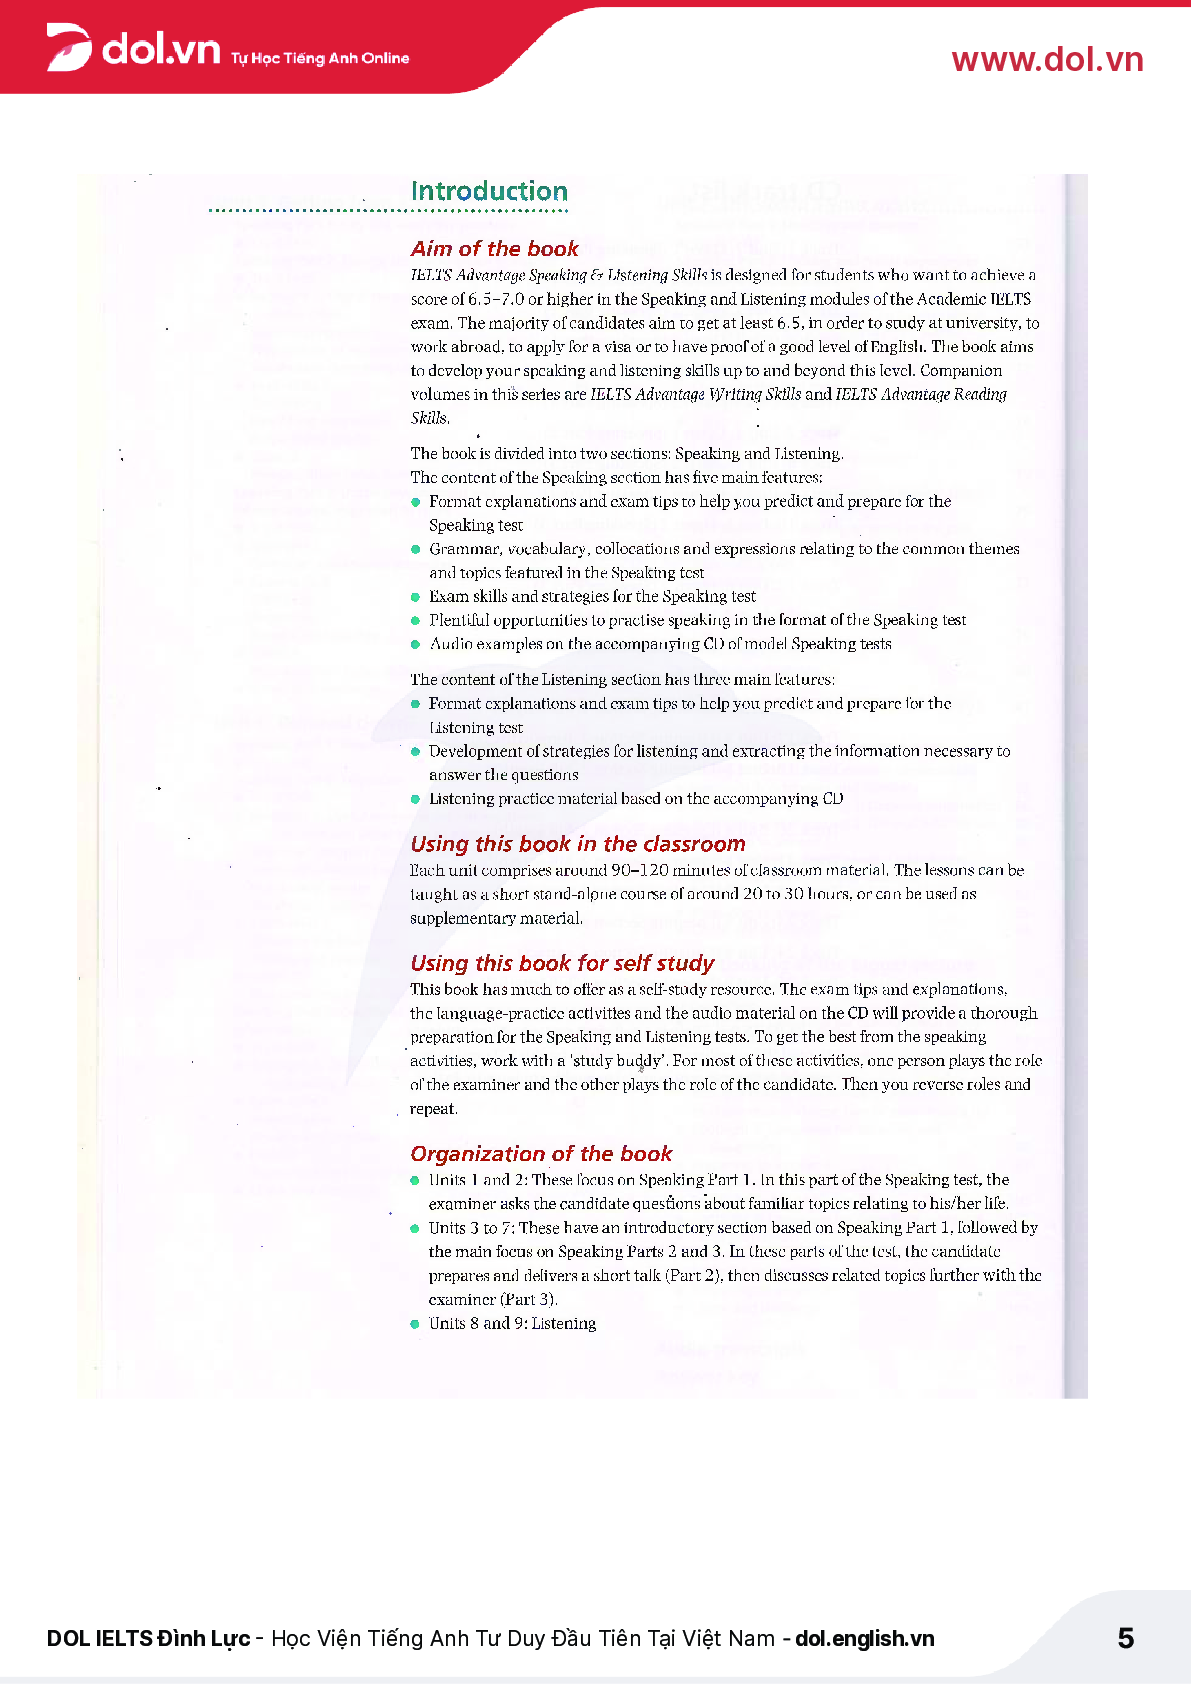 Sách IELTS Advantage Speaking & Listening Skills pdf | Xem online, tải PDF miễn phí (trang 5)